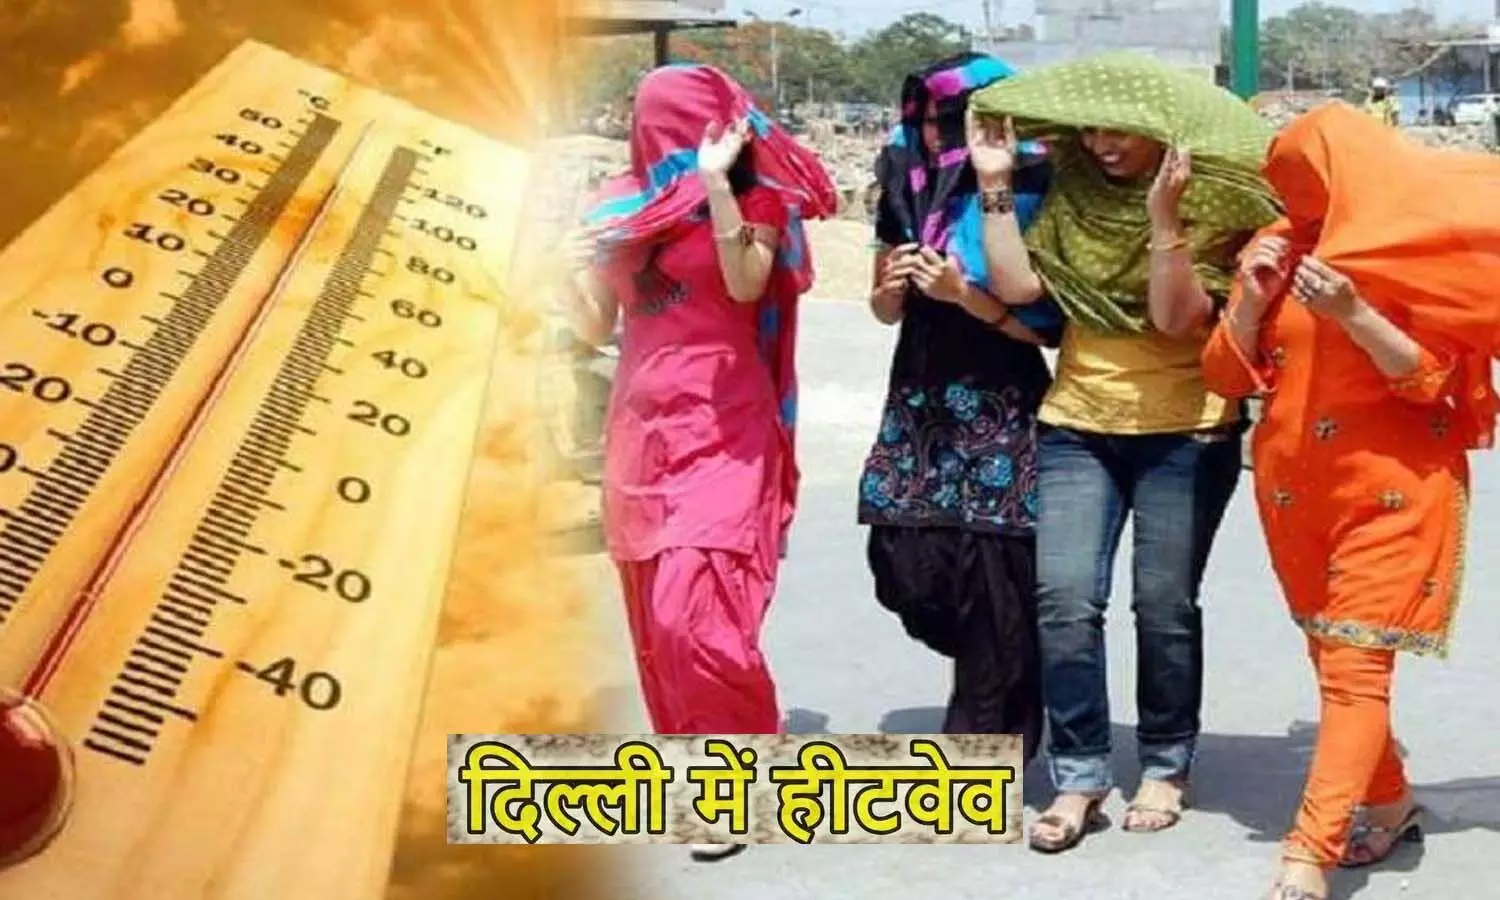 Heatwave started again in Delhi, people were suffering due to scorching heat